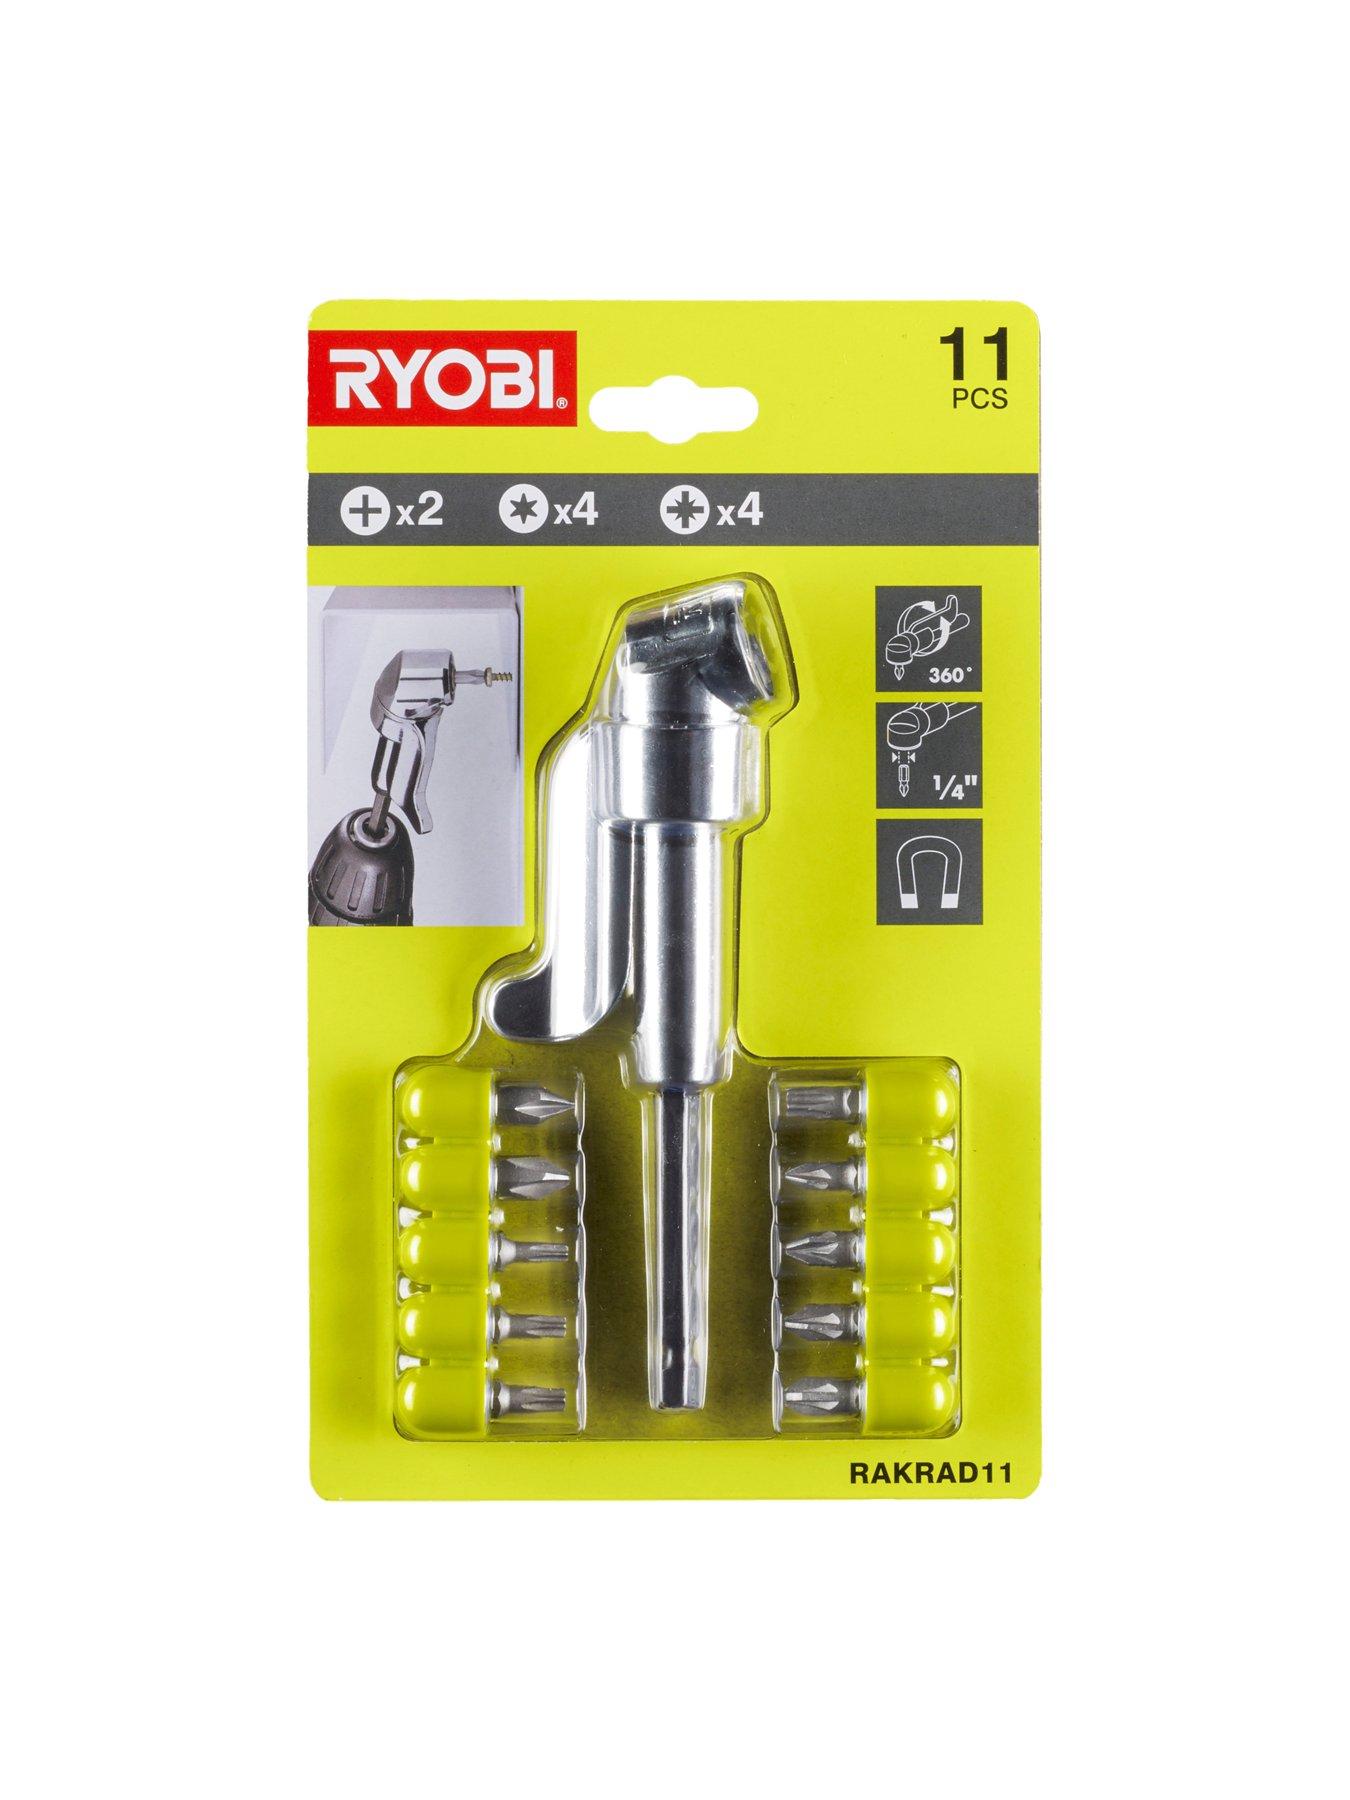 RYOBI RAKRAD11 Right Angle Drill Adapter and Screwdriver Bit Set